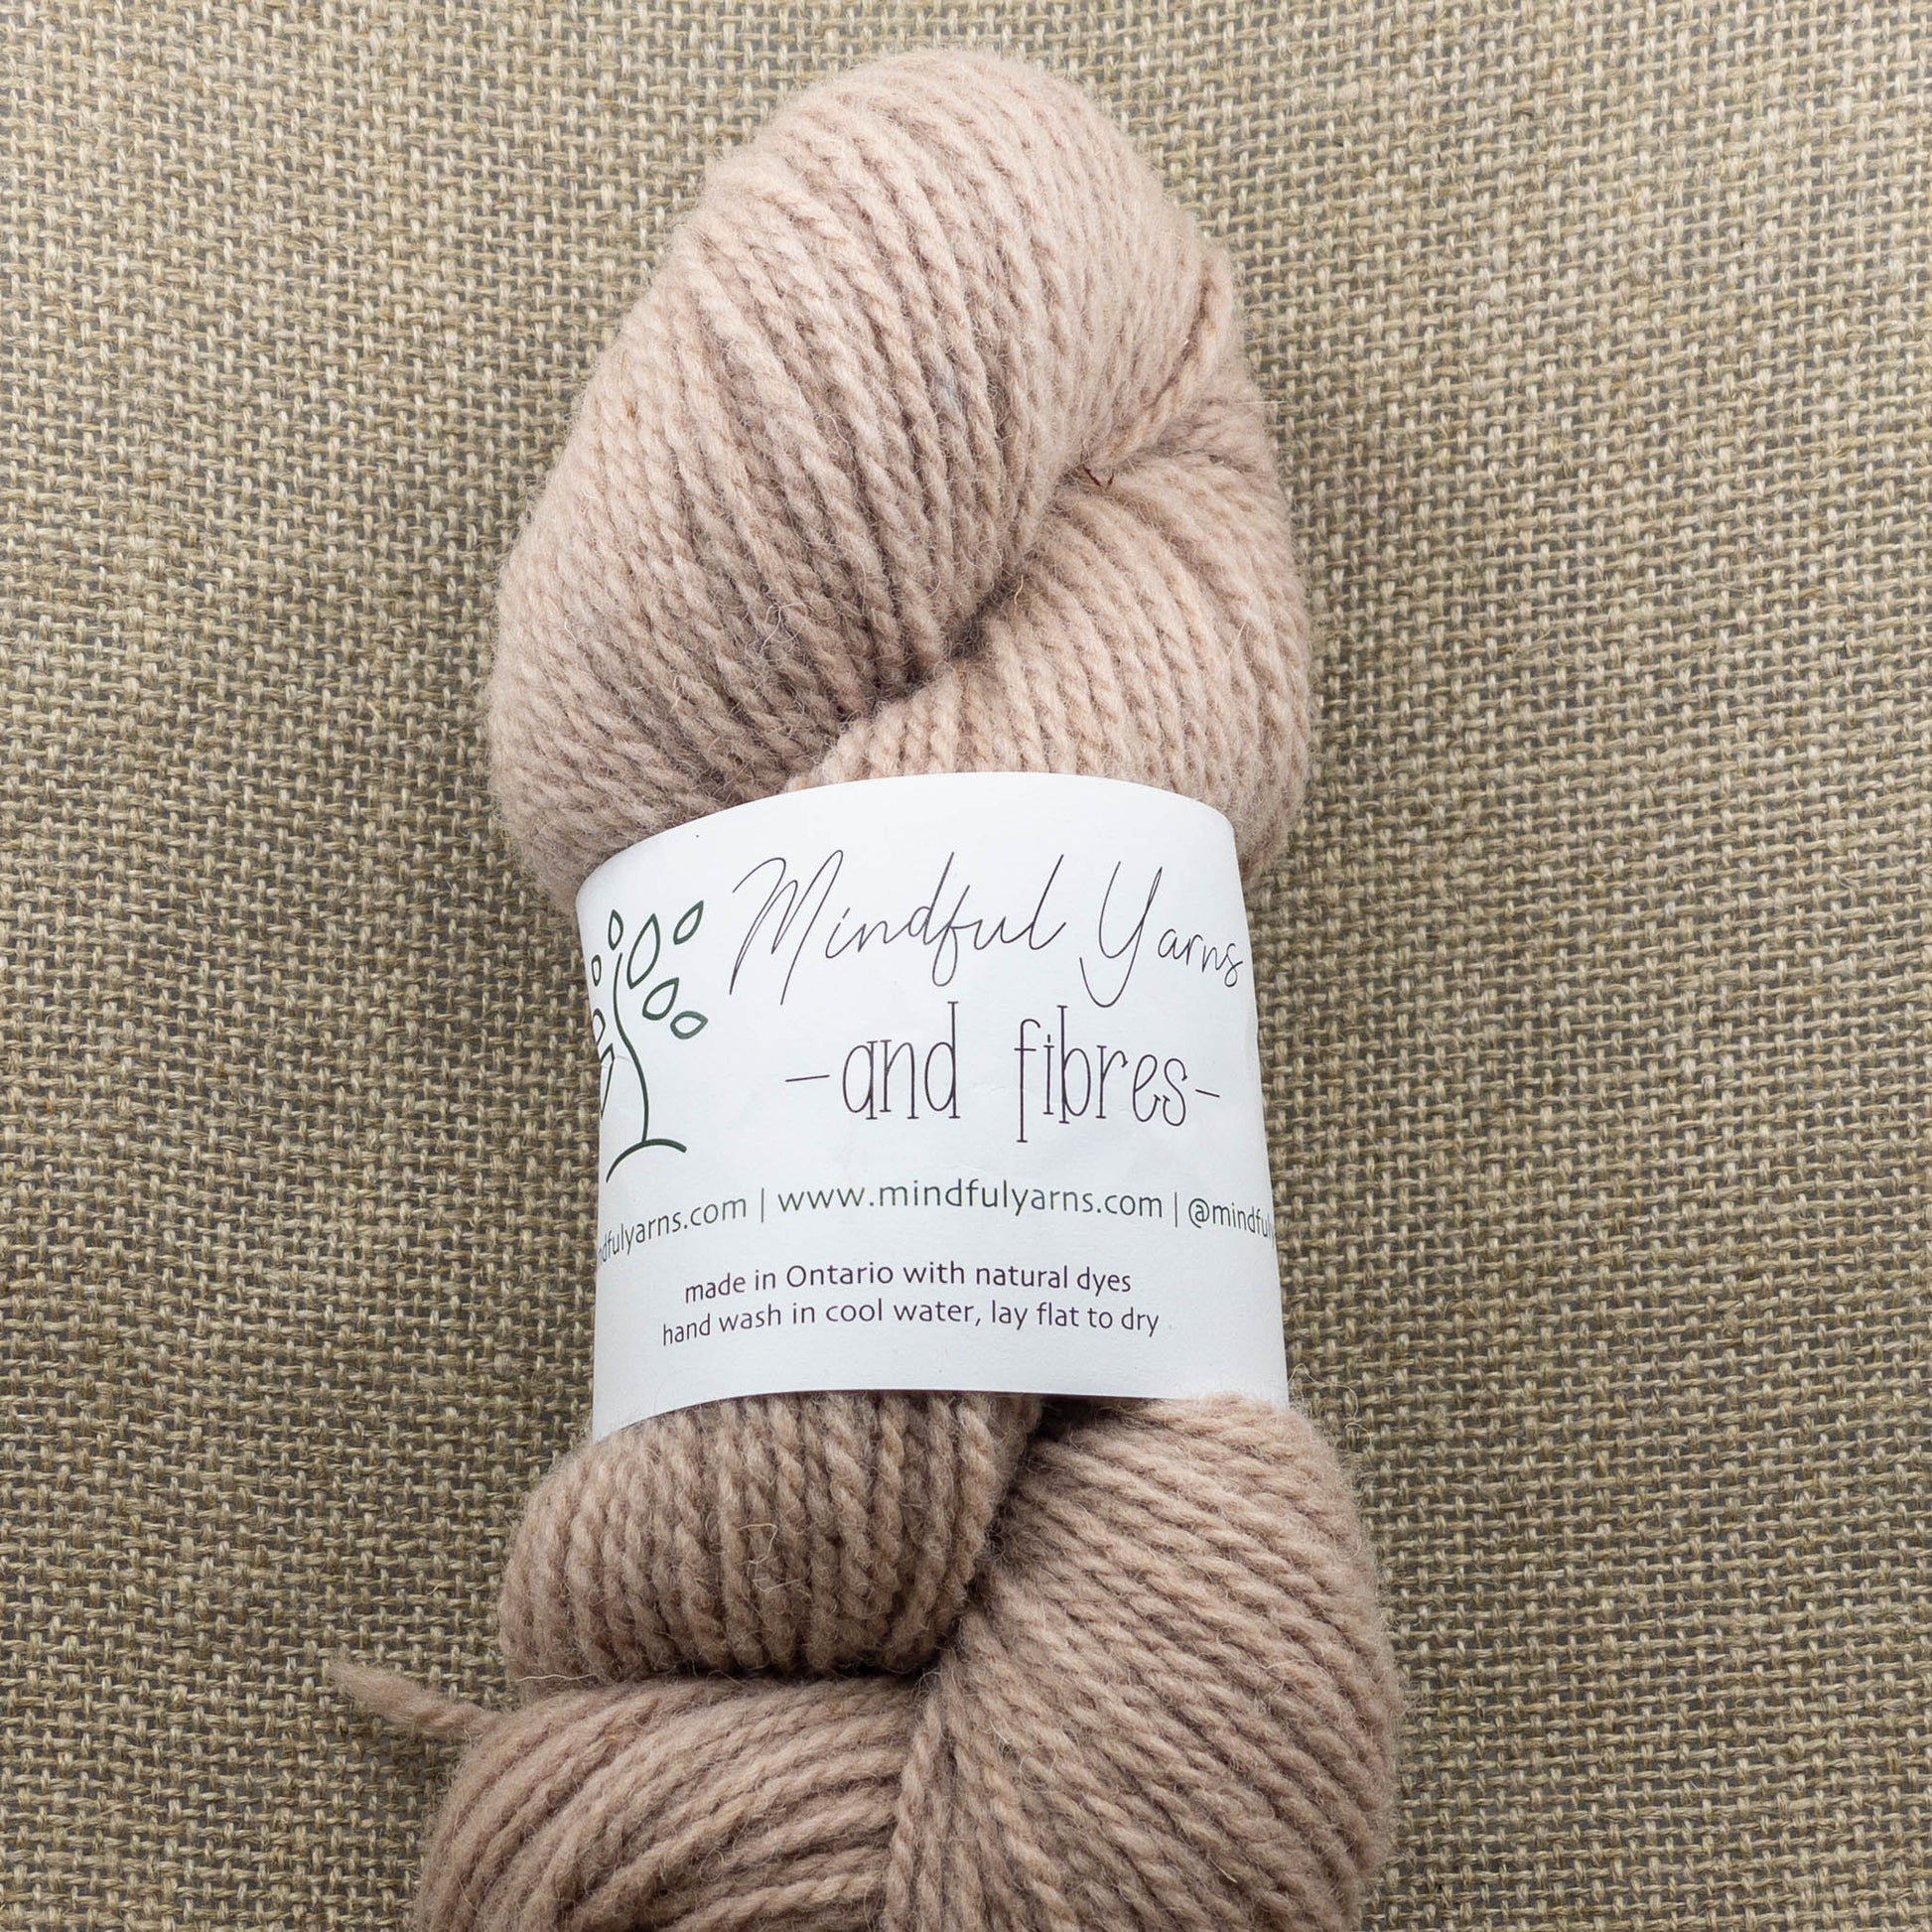 Ontario Dorset Wool - worsted weight - Mindful Yarns - Sappanwood sequoia X-0210